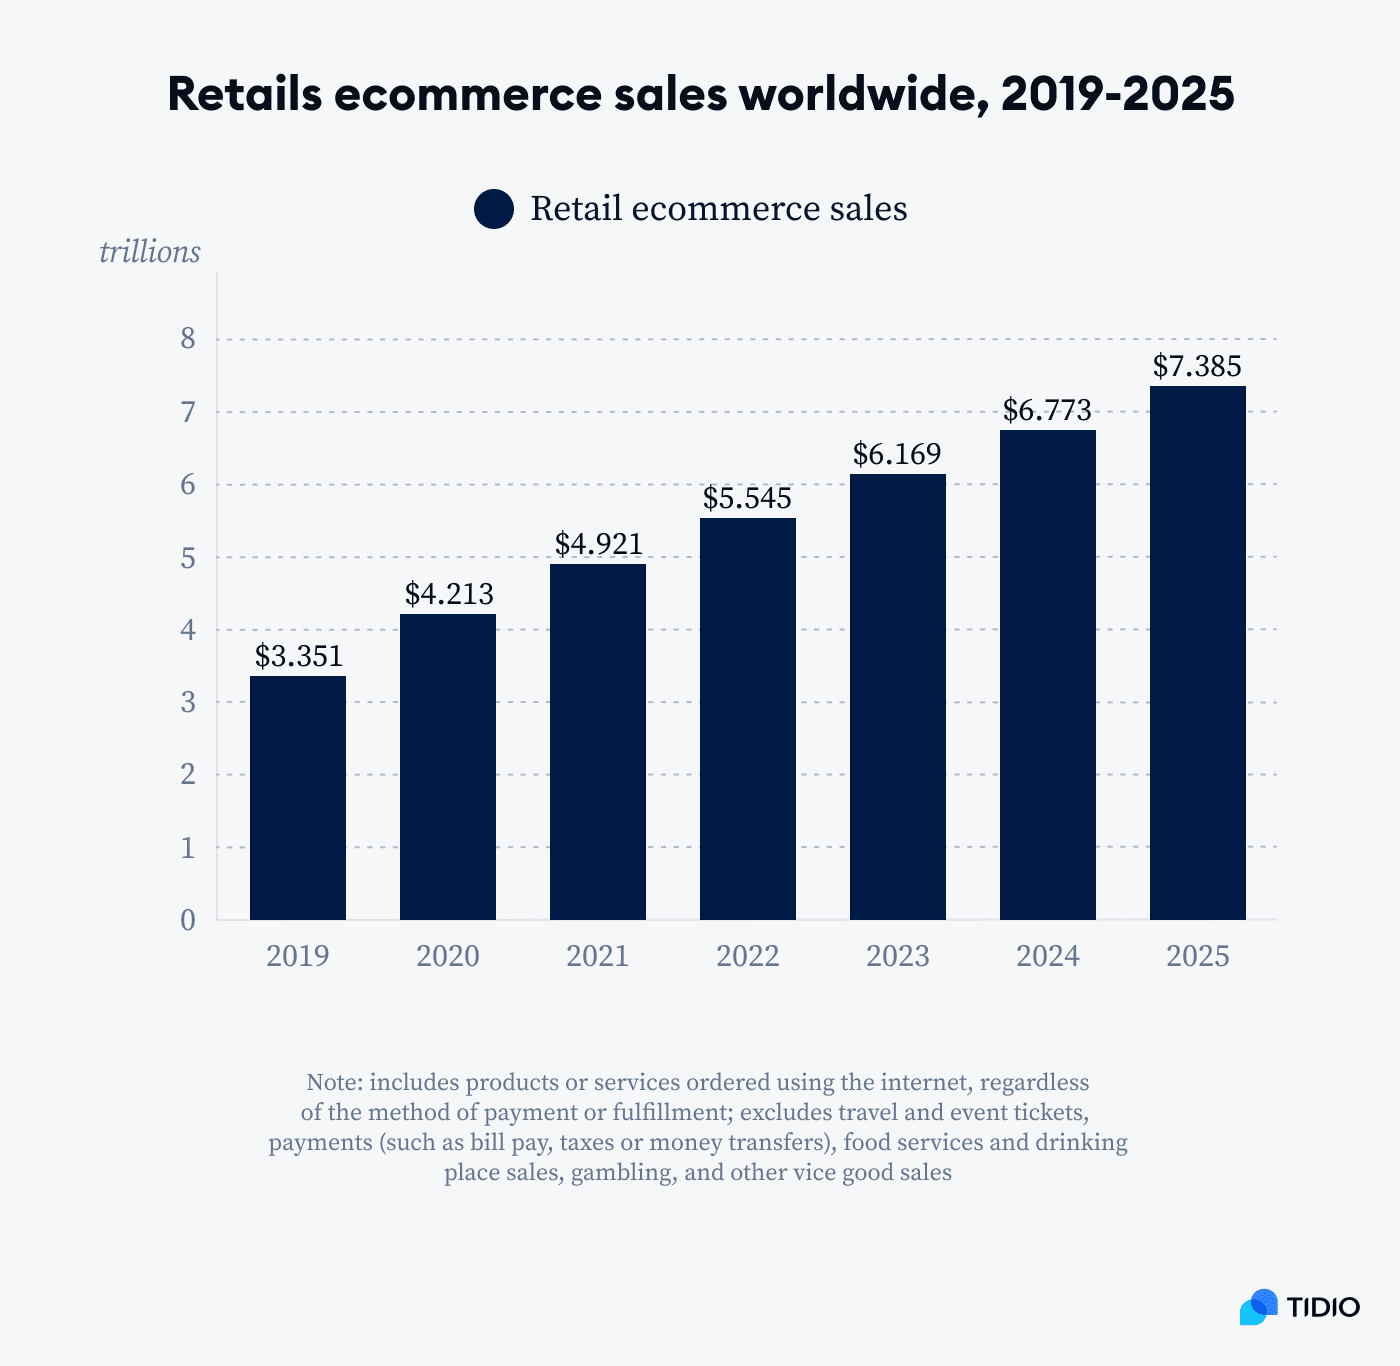 retails ecommerce sales worldwide 2019-2025